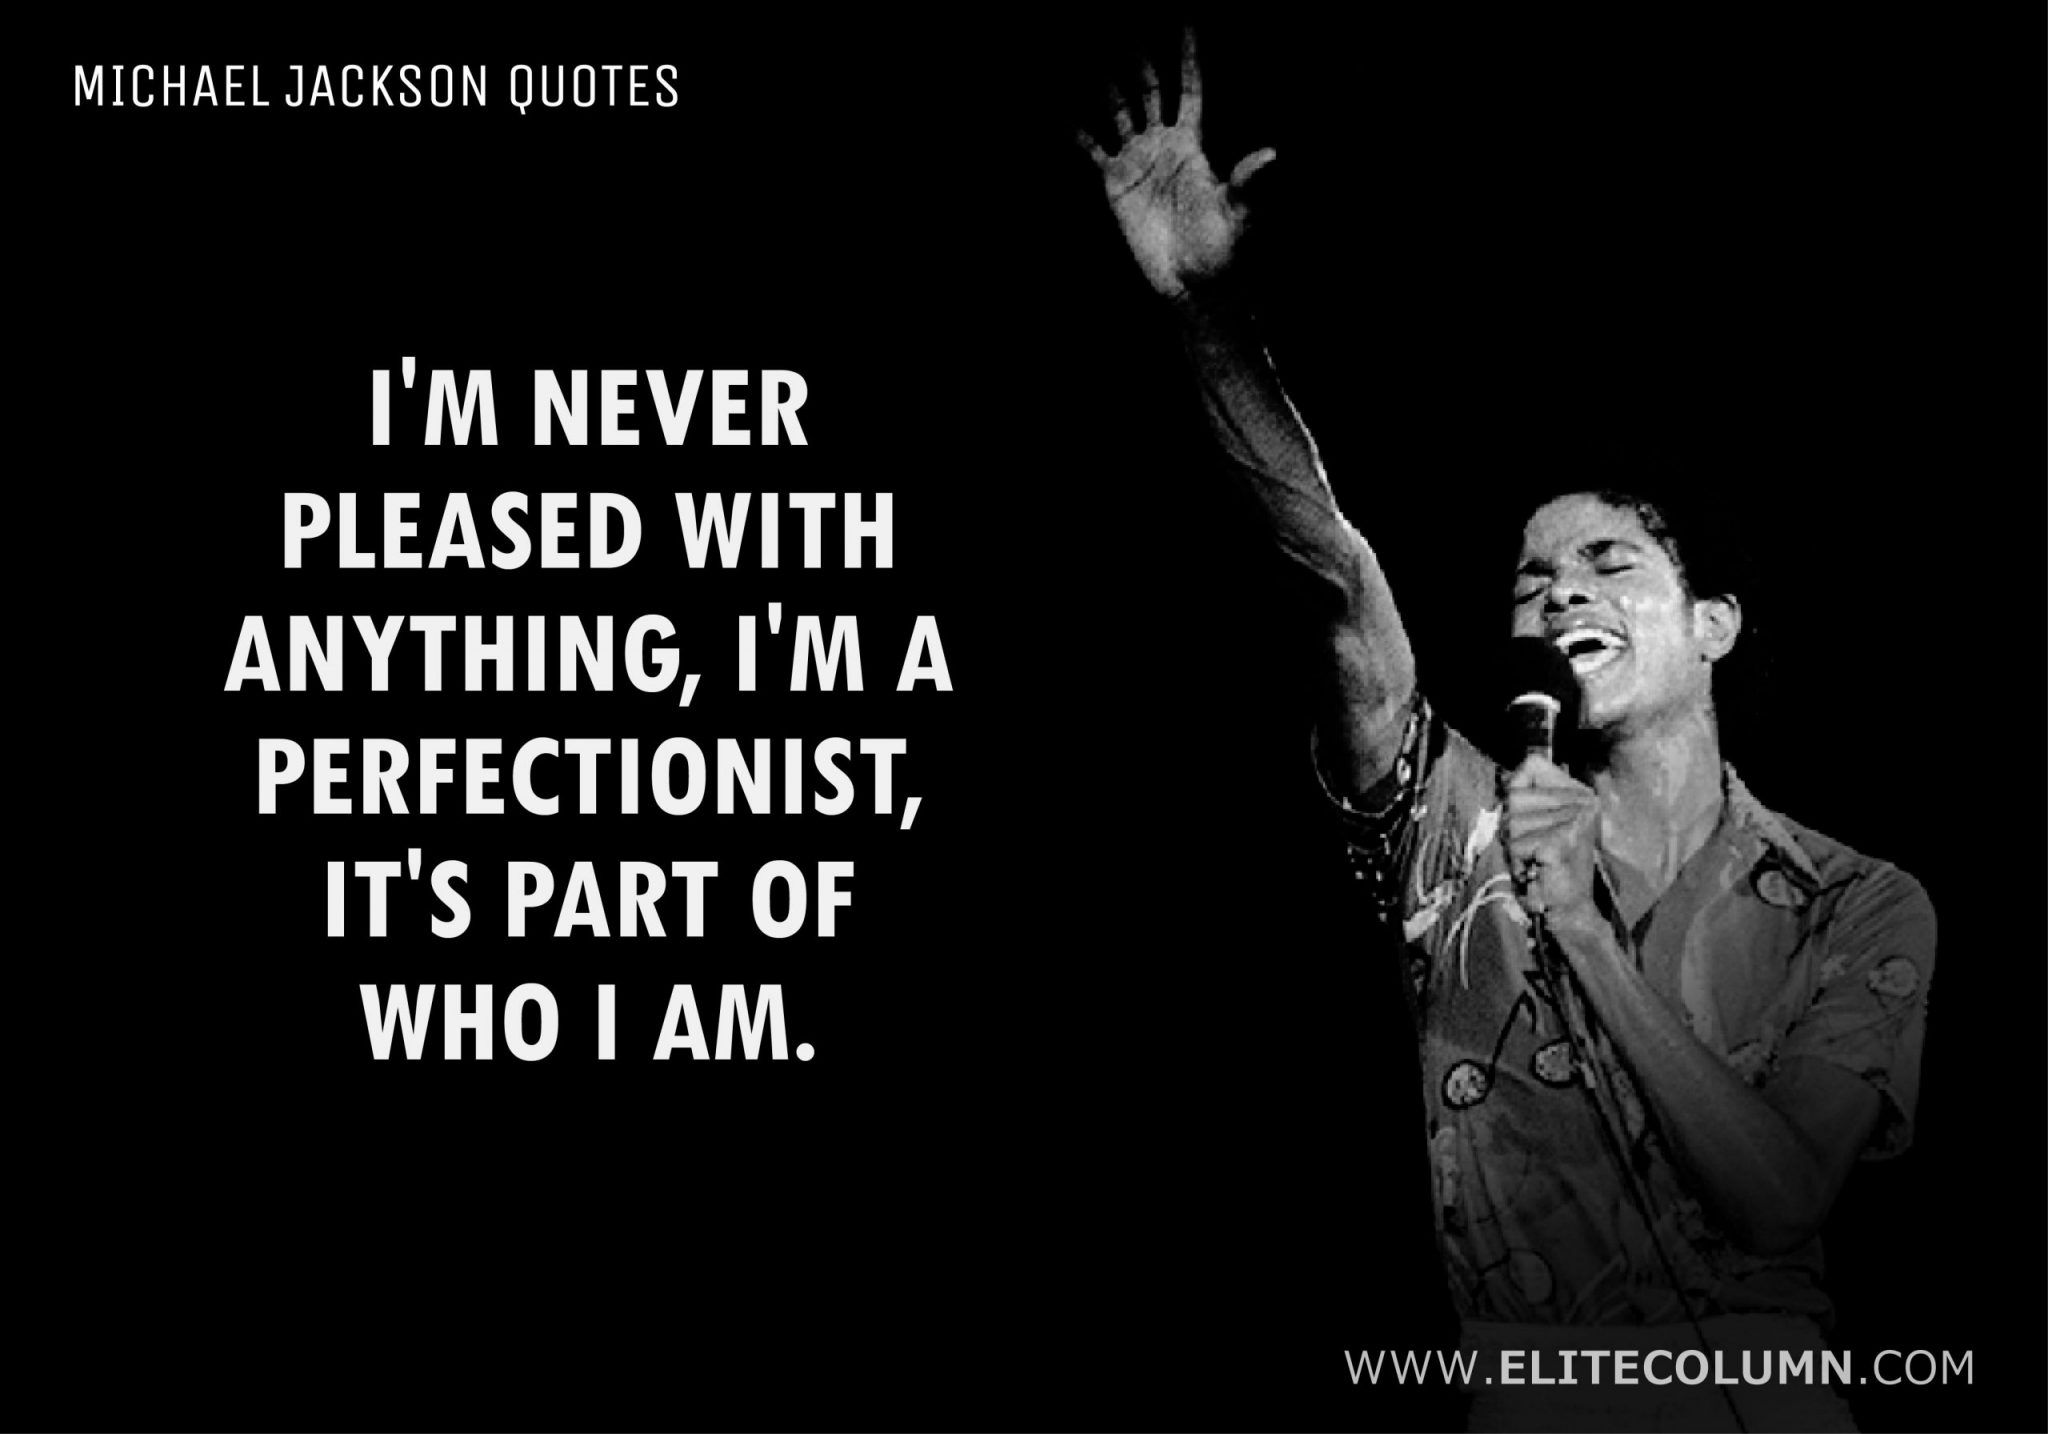 Michael Jackson Quotes (7)